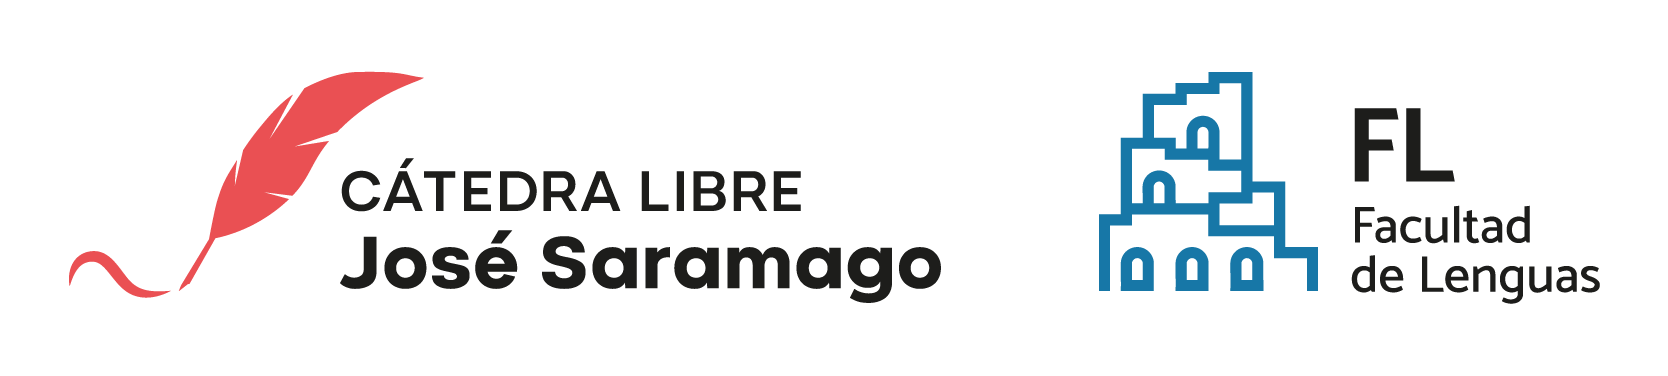 logo saramago_FL.png